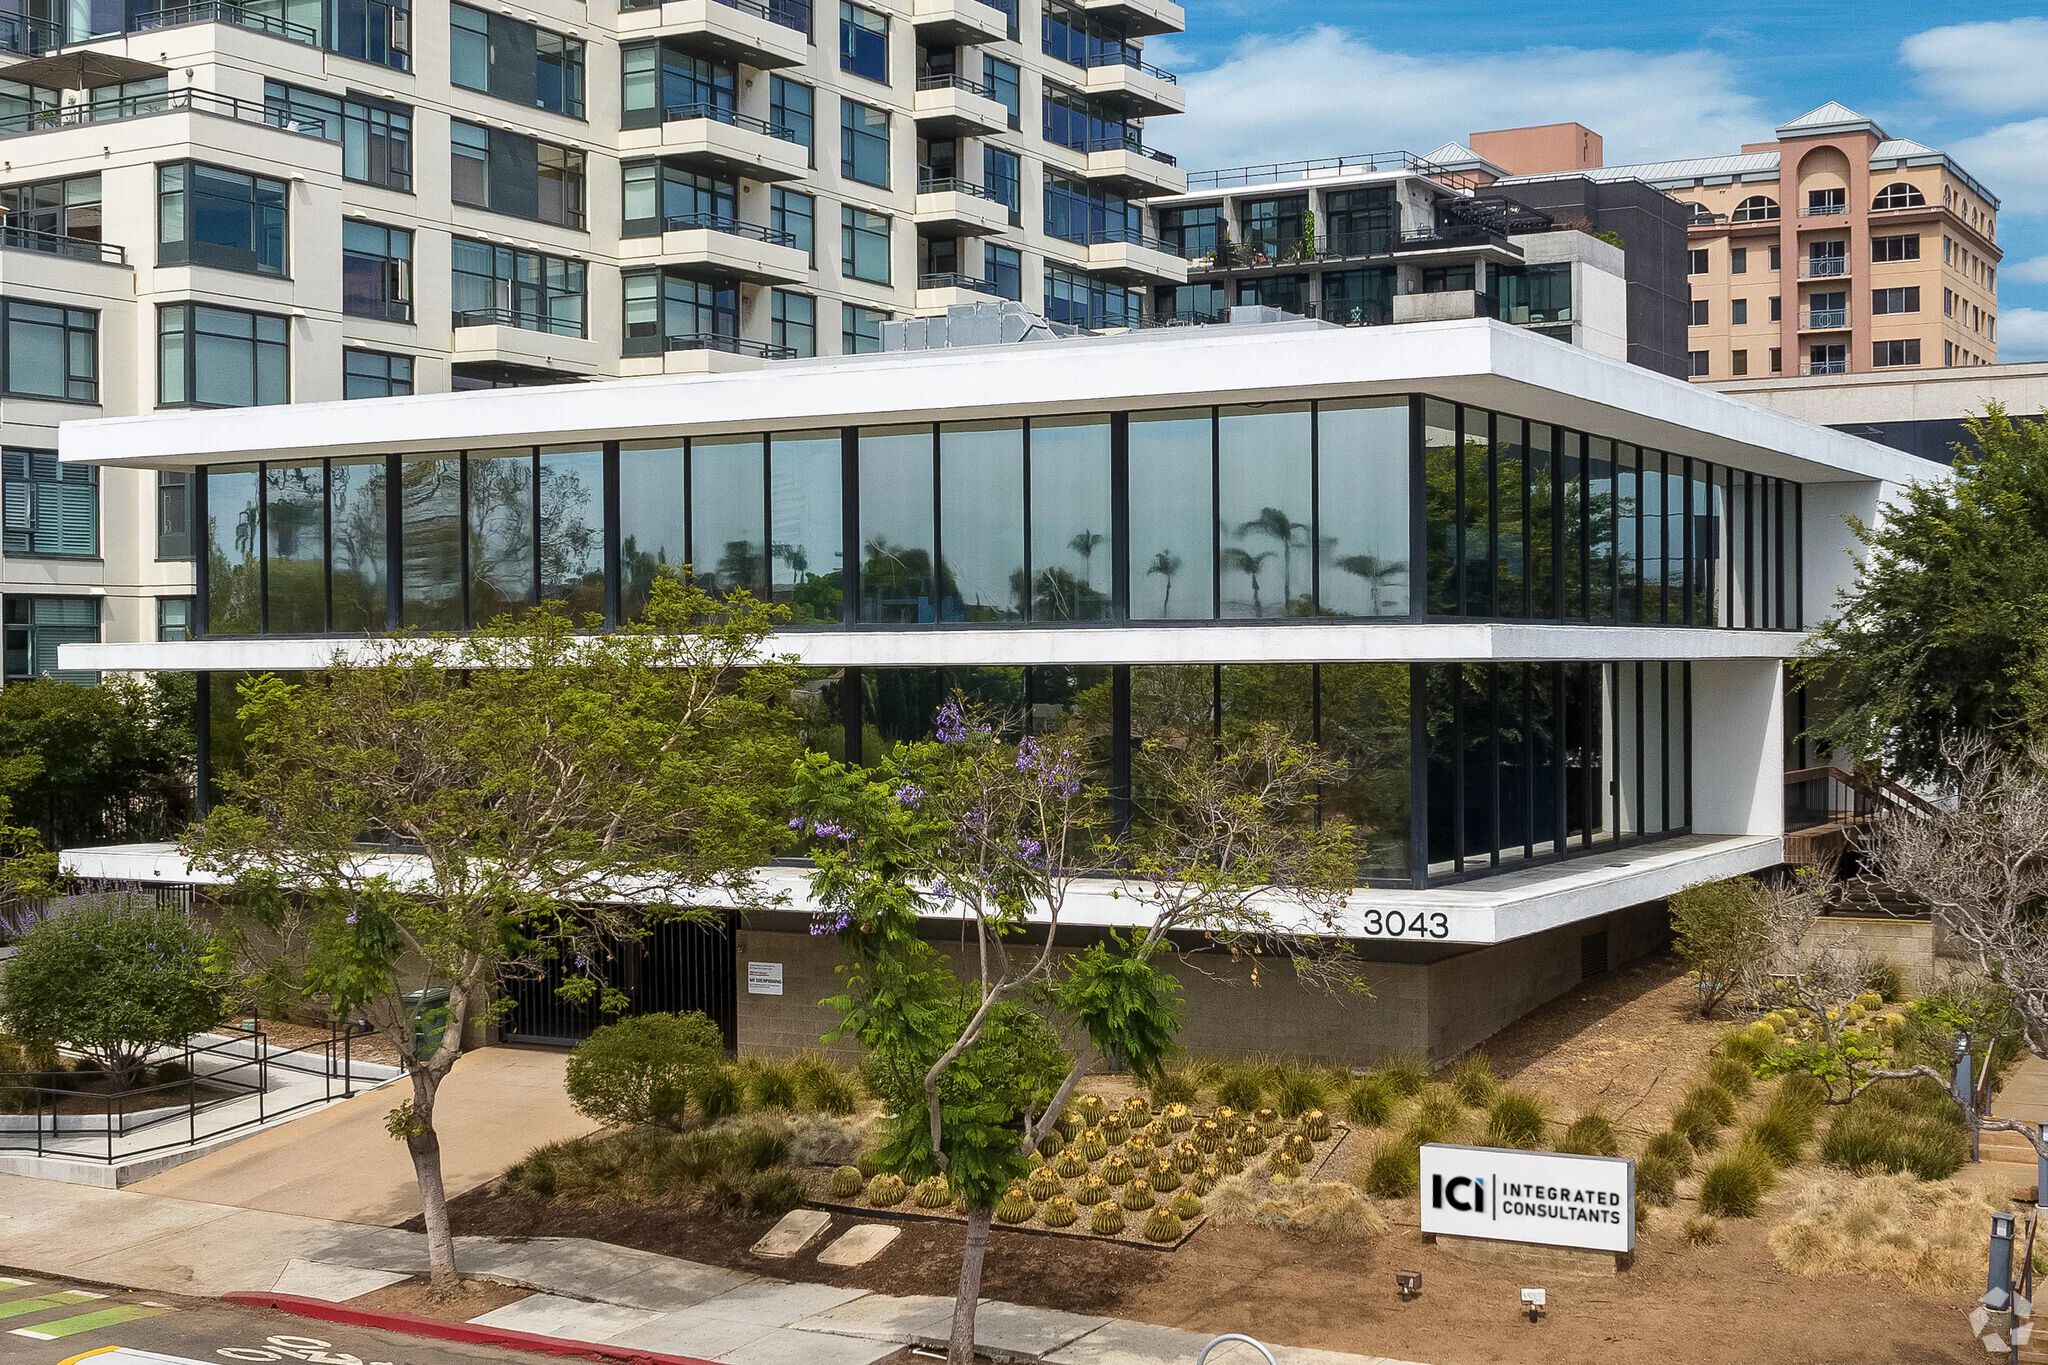 ICI’s San Diego HQ: Where Innovation Takes Flight